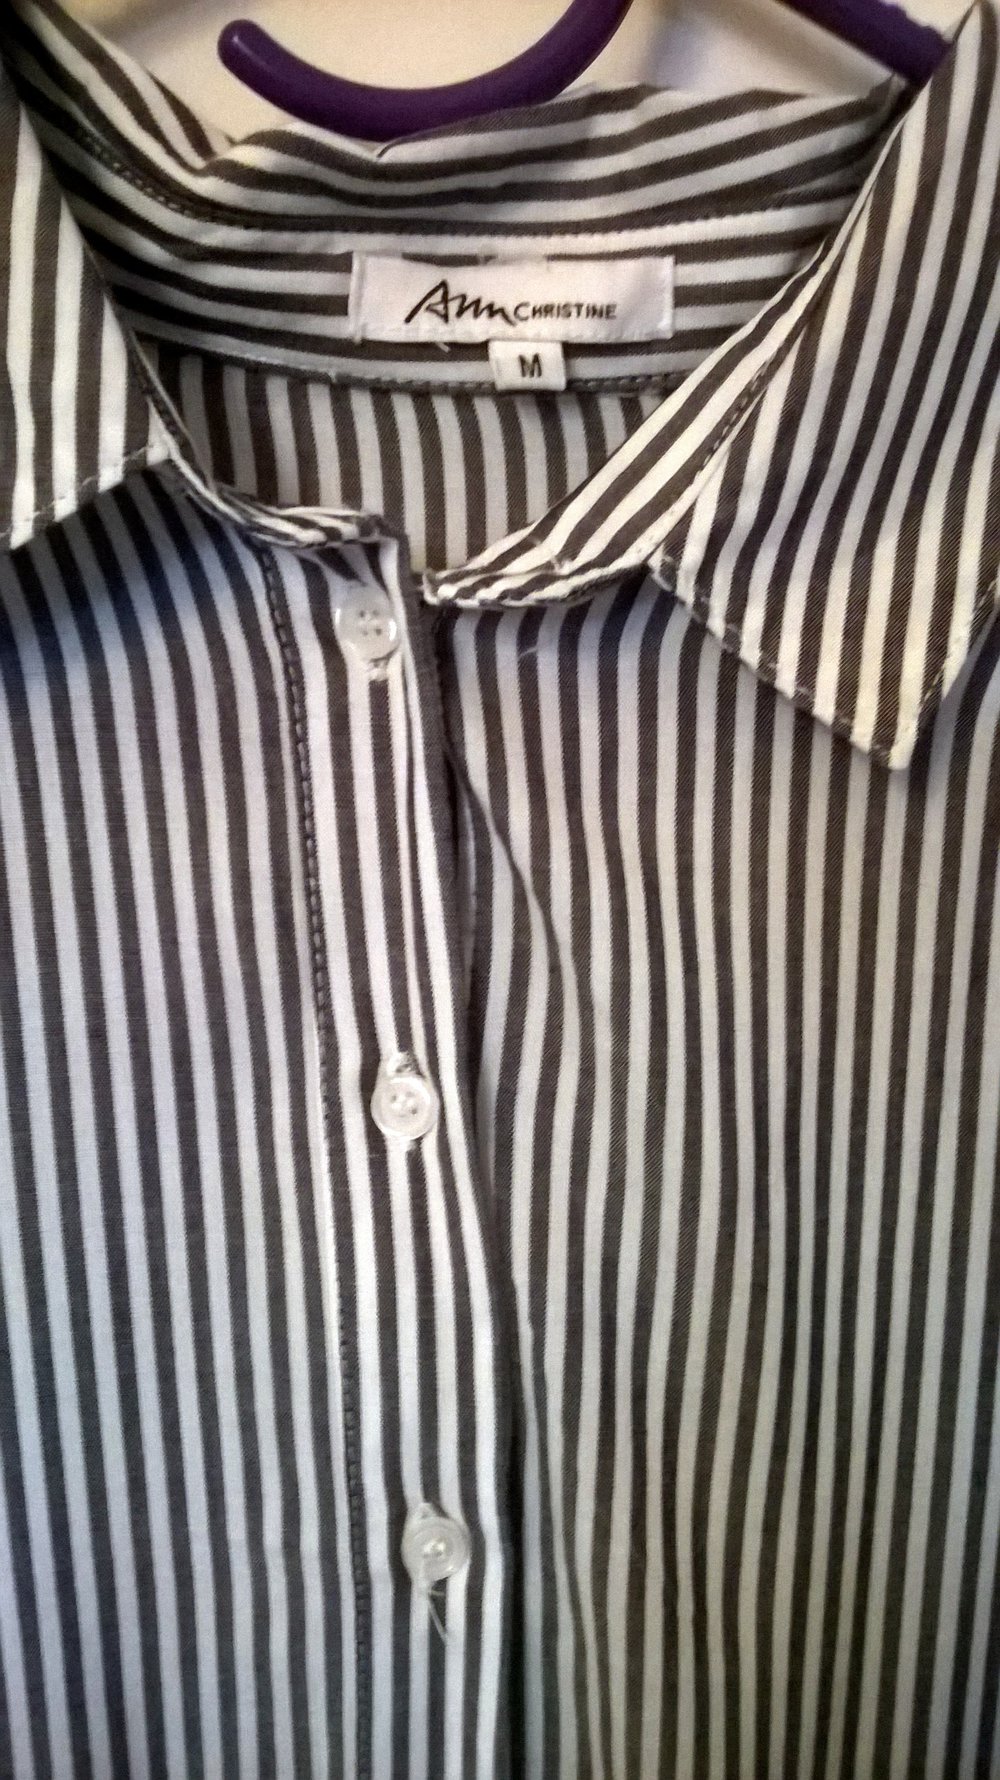 grau-weiß-gestreiftes Hemd